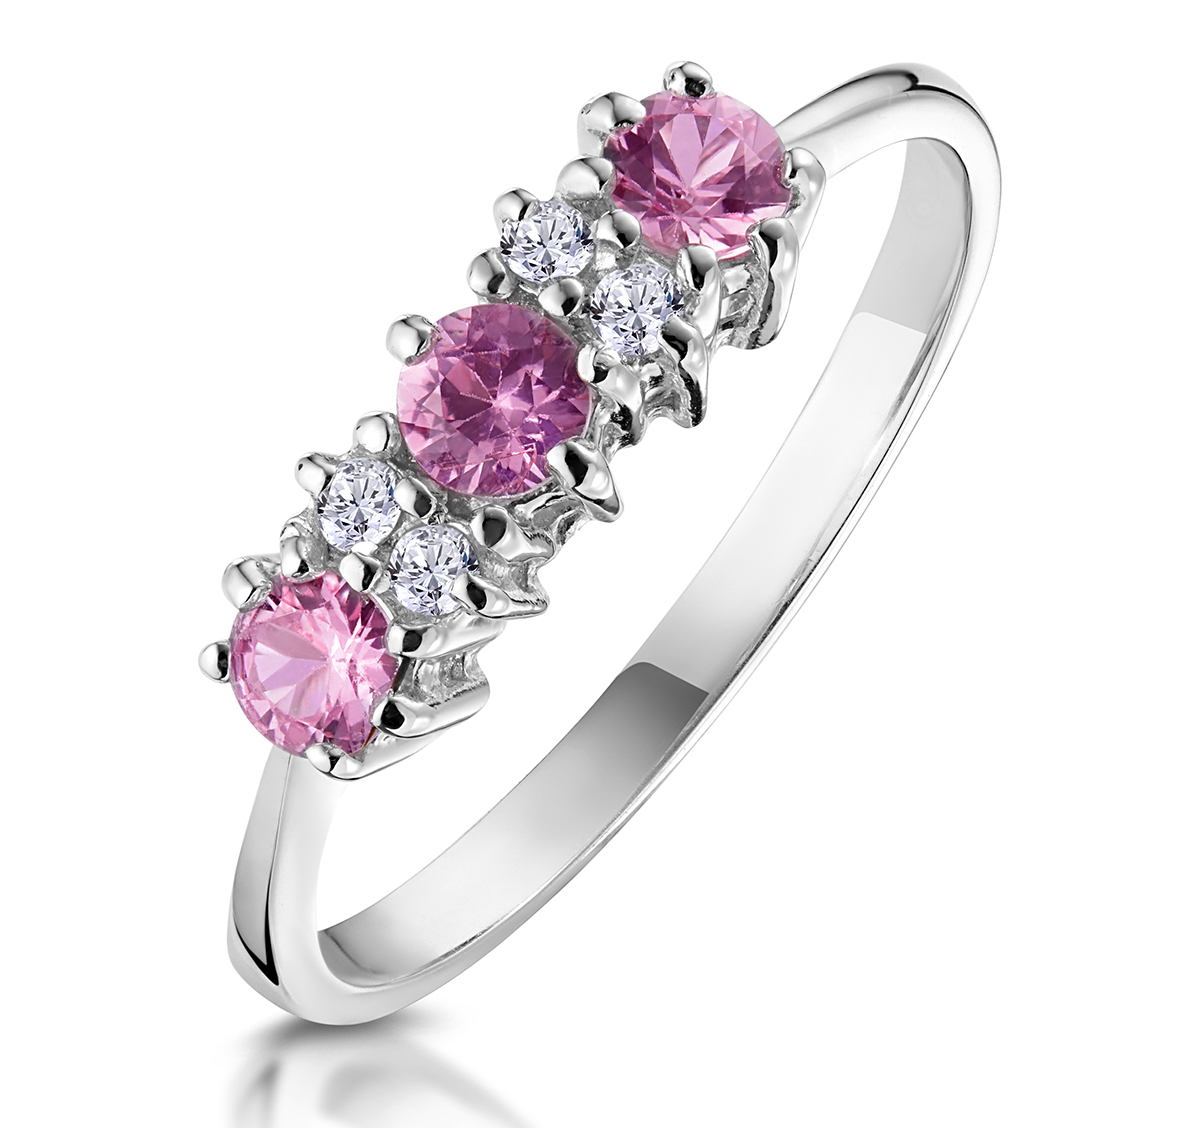 Pink Sapphire Rings | TheDiamondStore.co.uk™